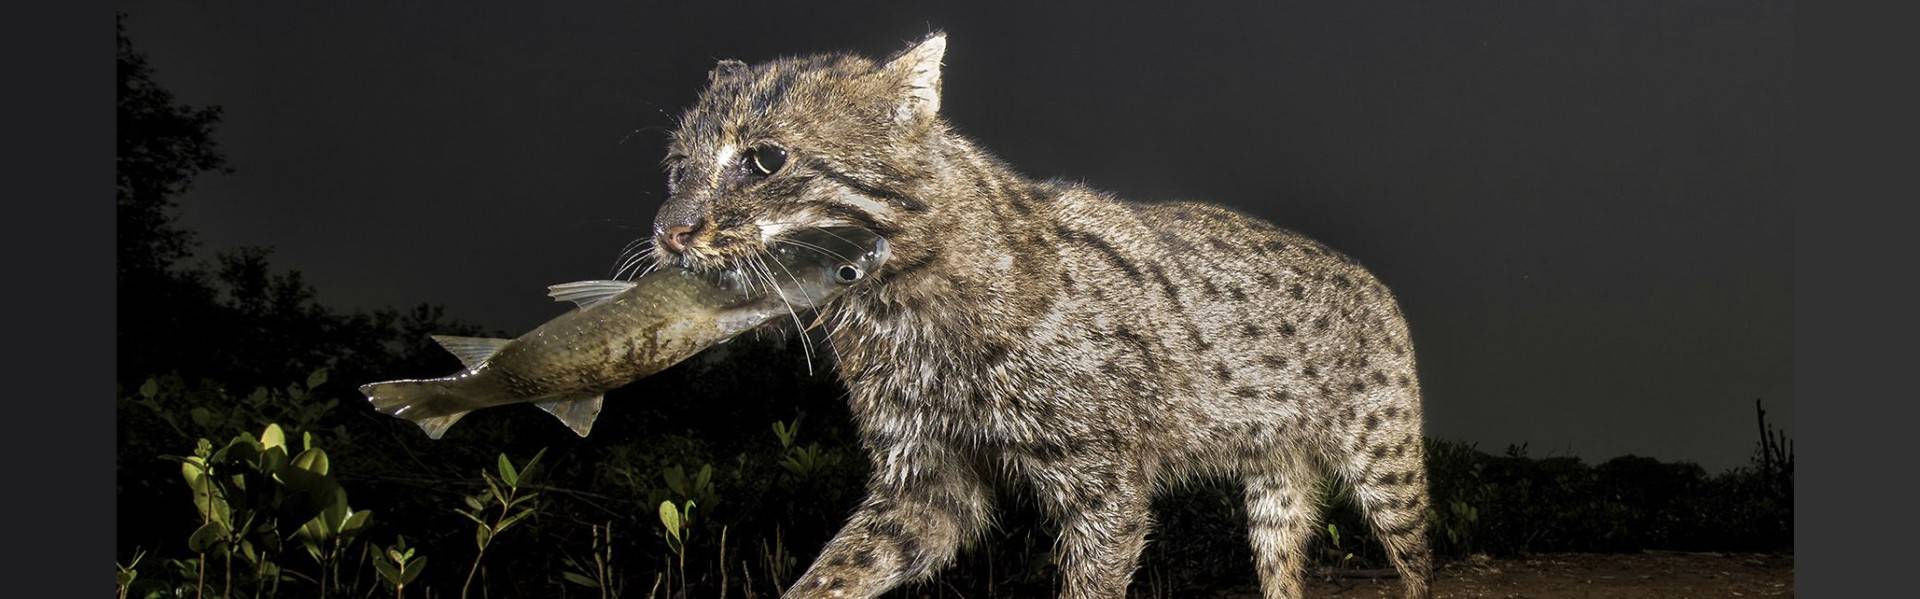 Fishing cat, Endangered Species, Wetland Habitat, Carnivore